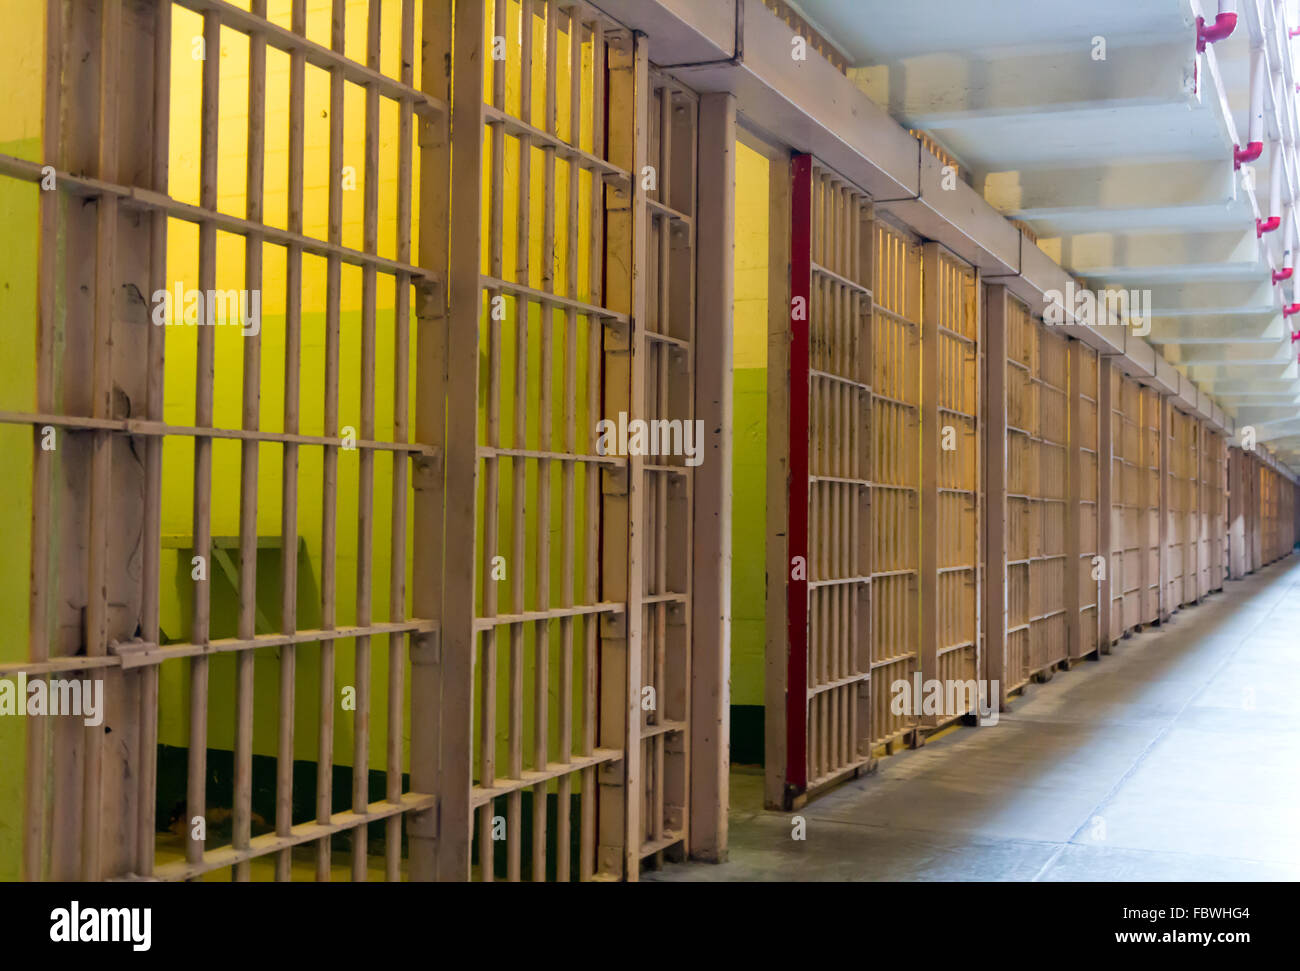 Prison cell bars Stock Photo